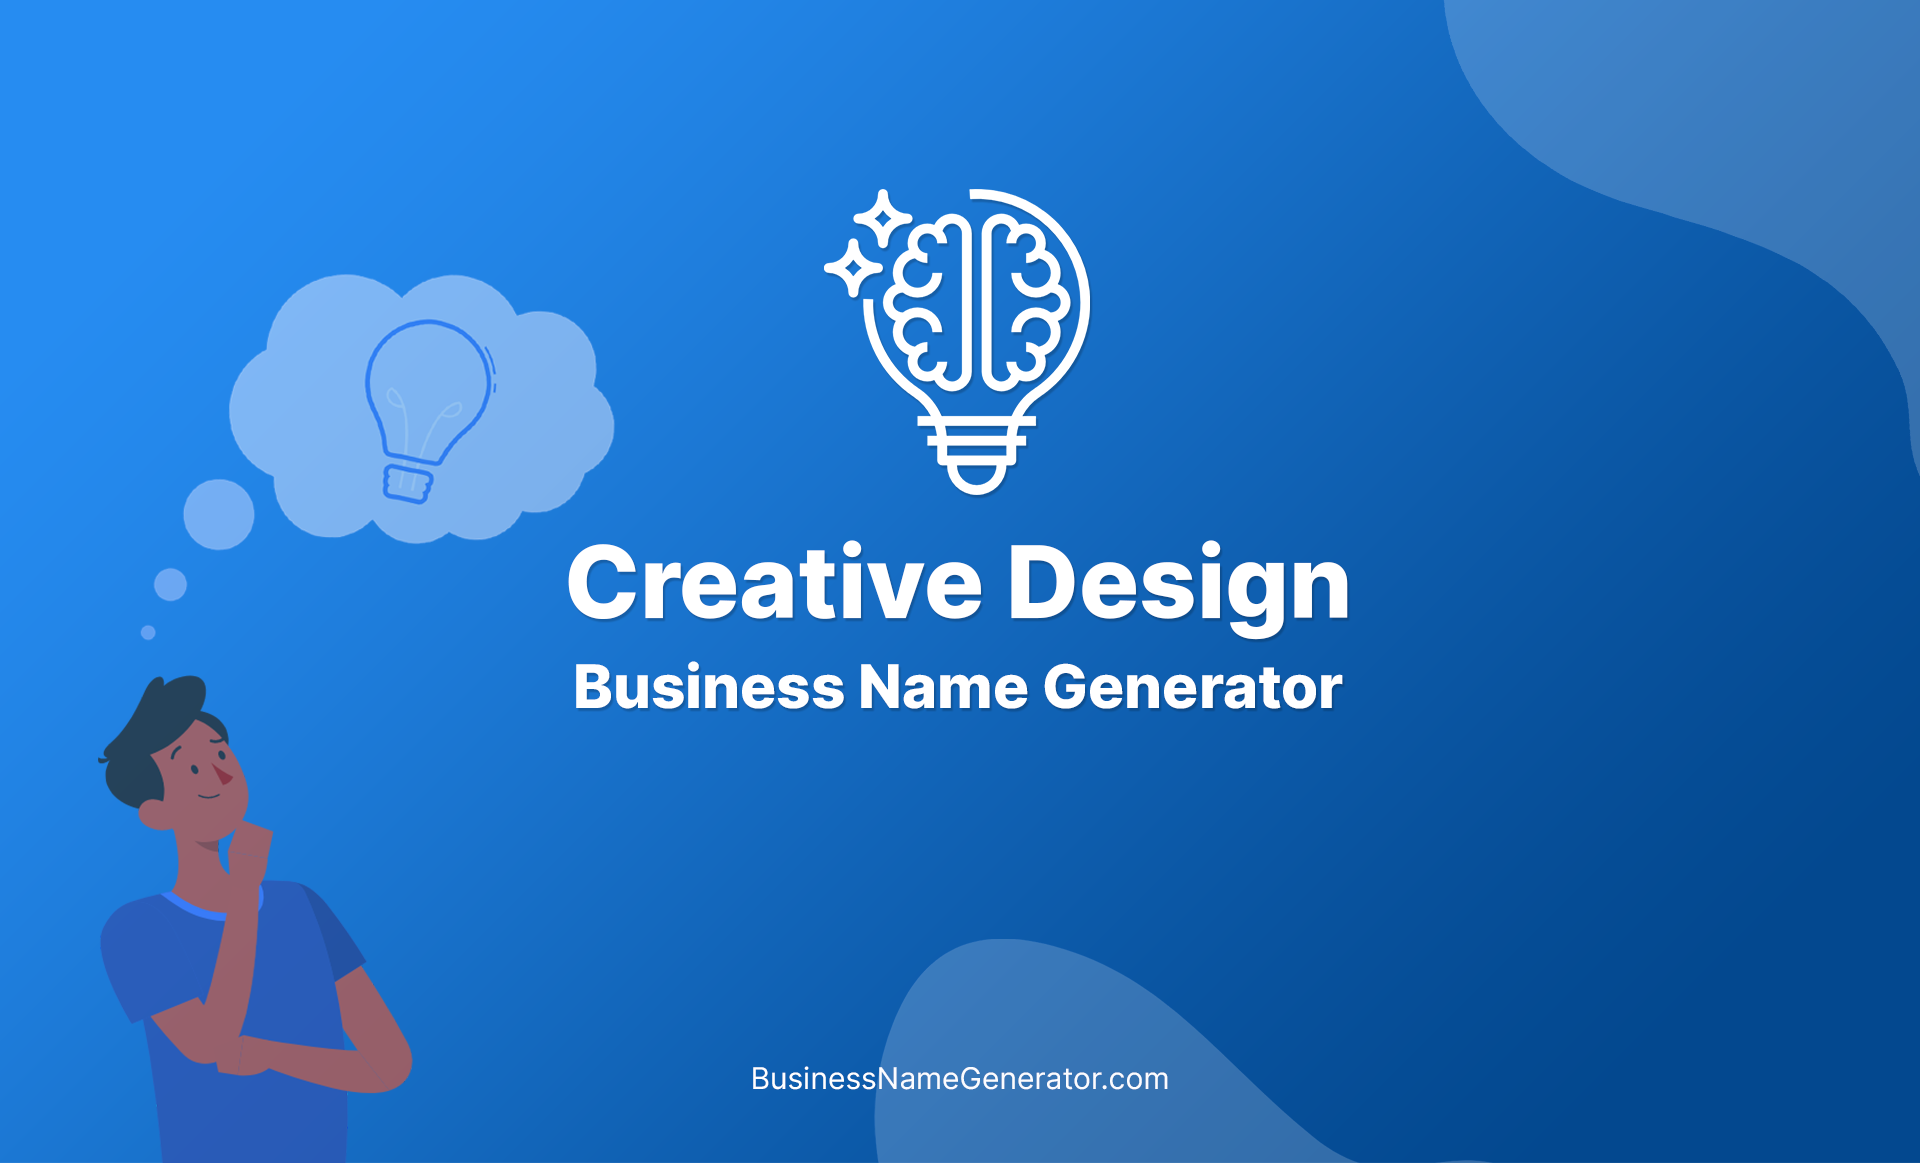 Creative Design Business Name Generator